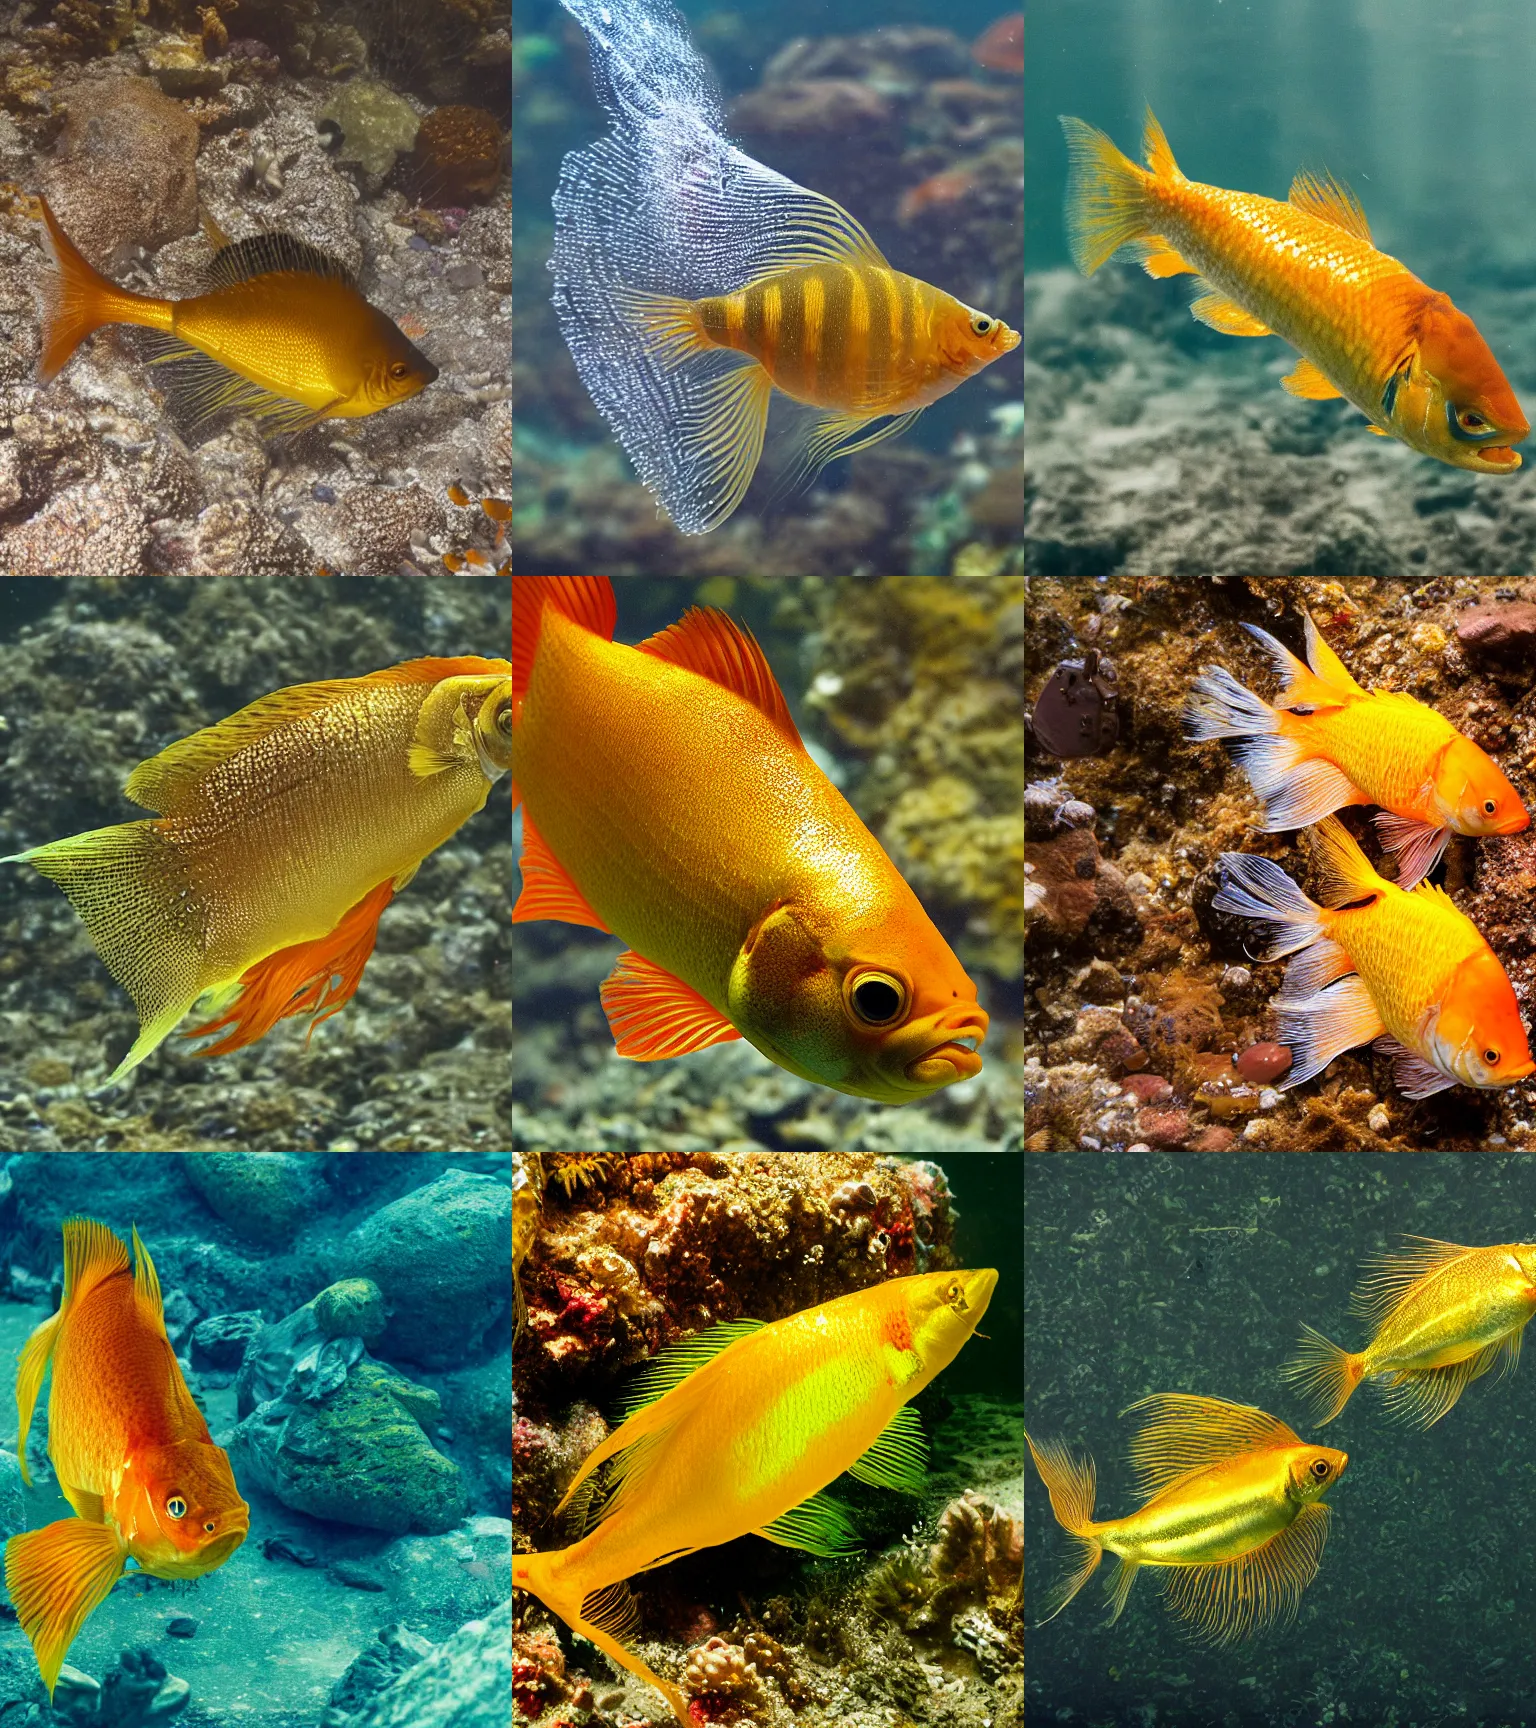 Prompt: Golden fish in water exoskeleton